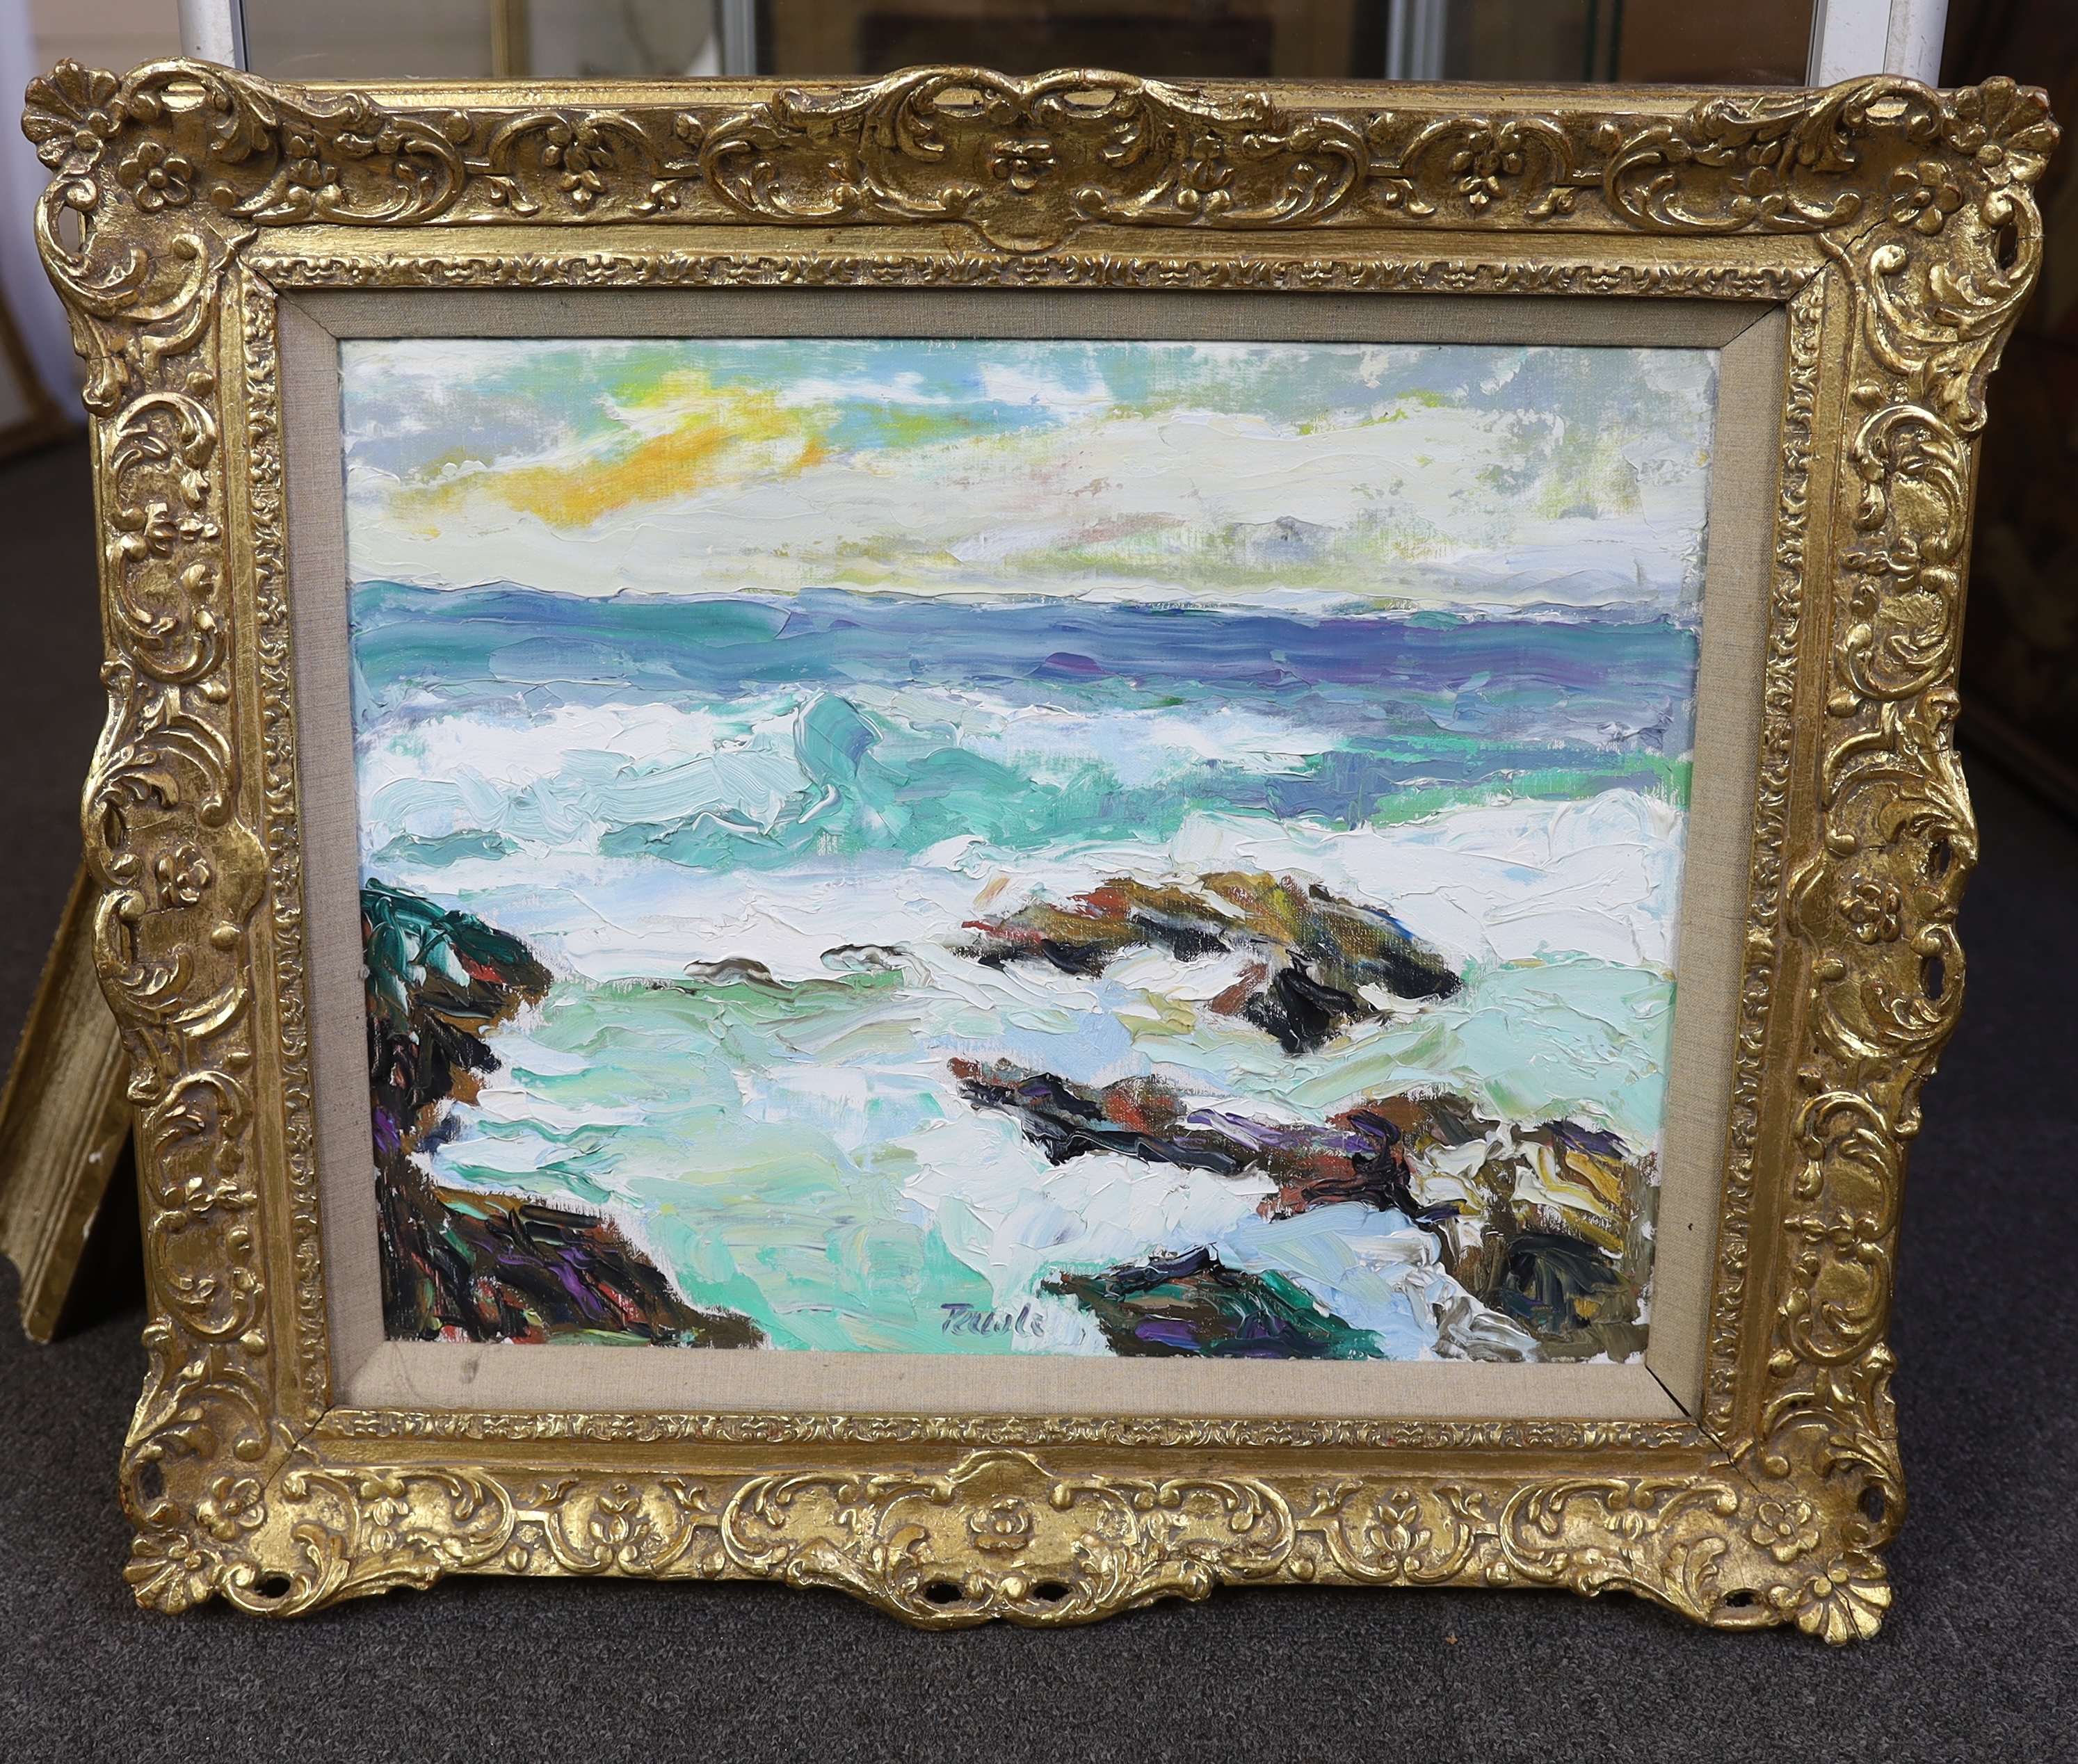 John Pawle (British, 1915-2010), Coastal scene, oil on canvas, 37 x 47cm